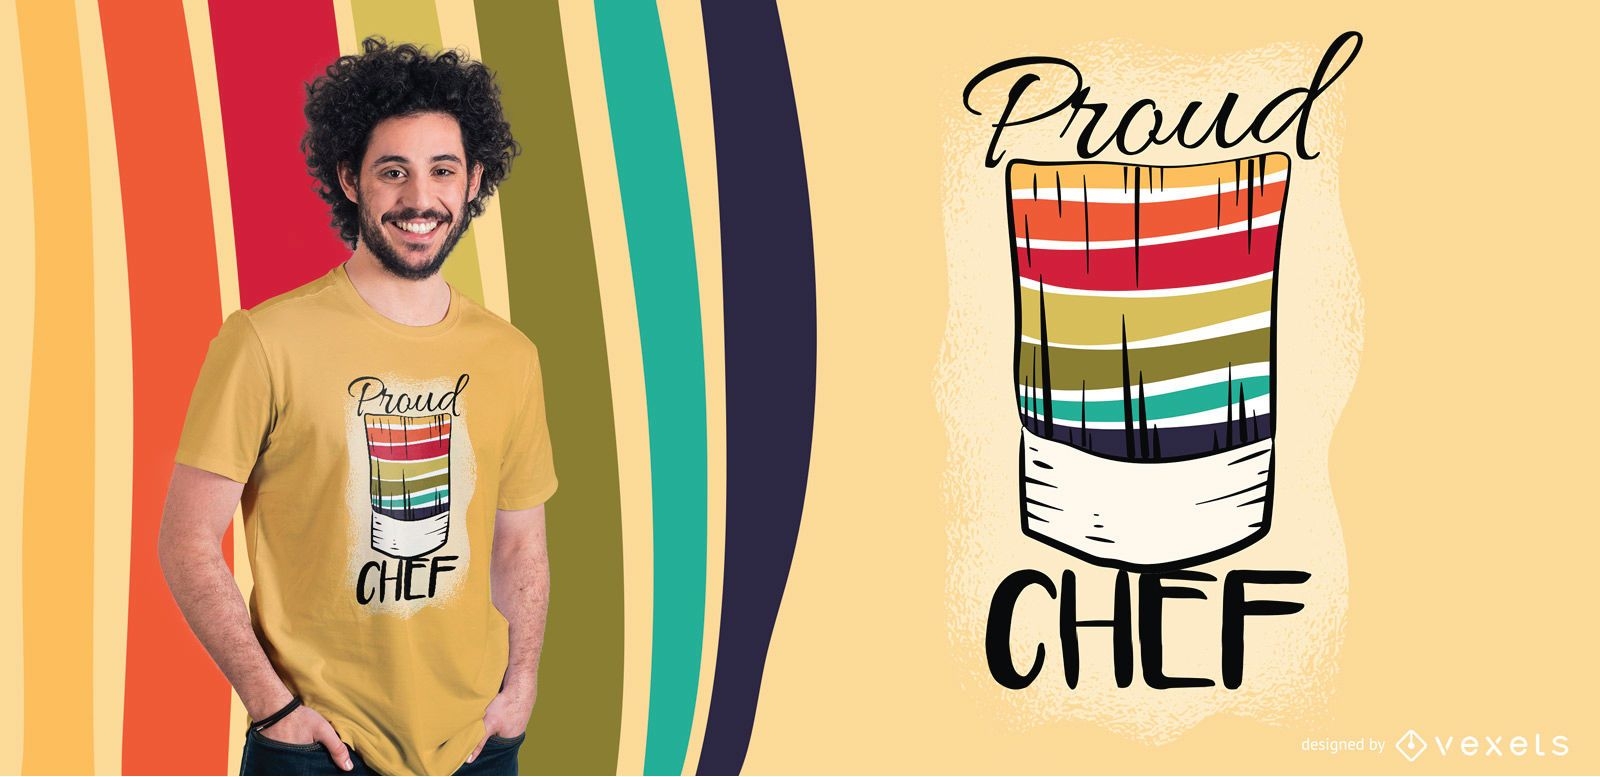 Diseño de camiseta Proud Chef Rainbow